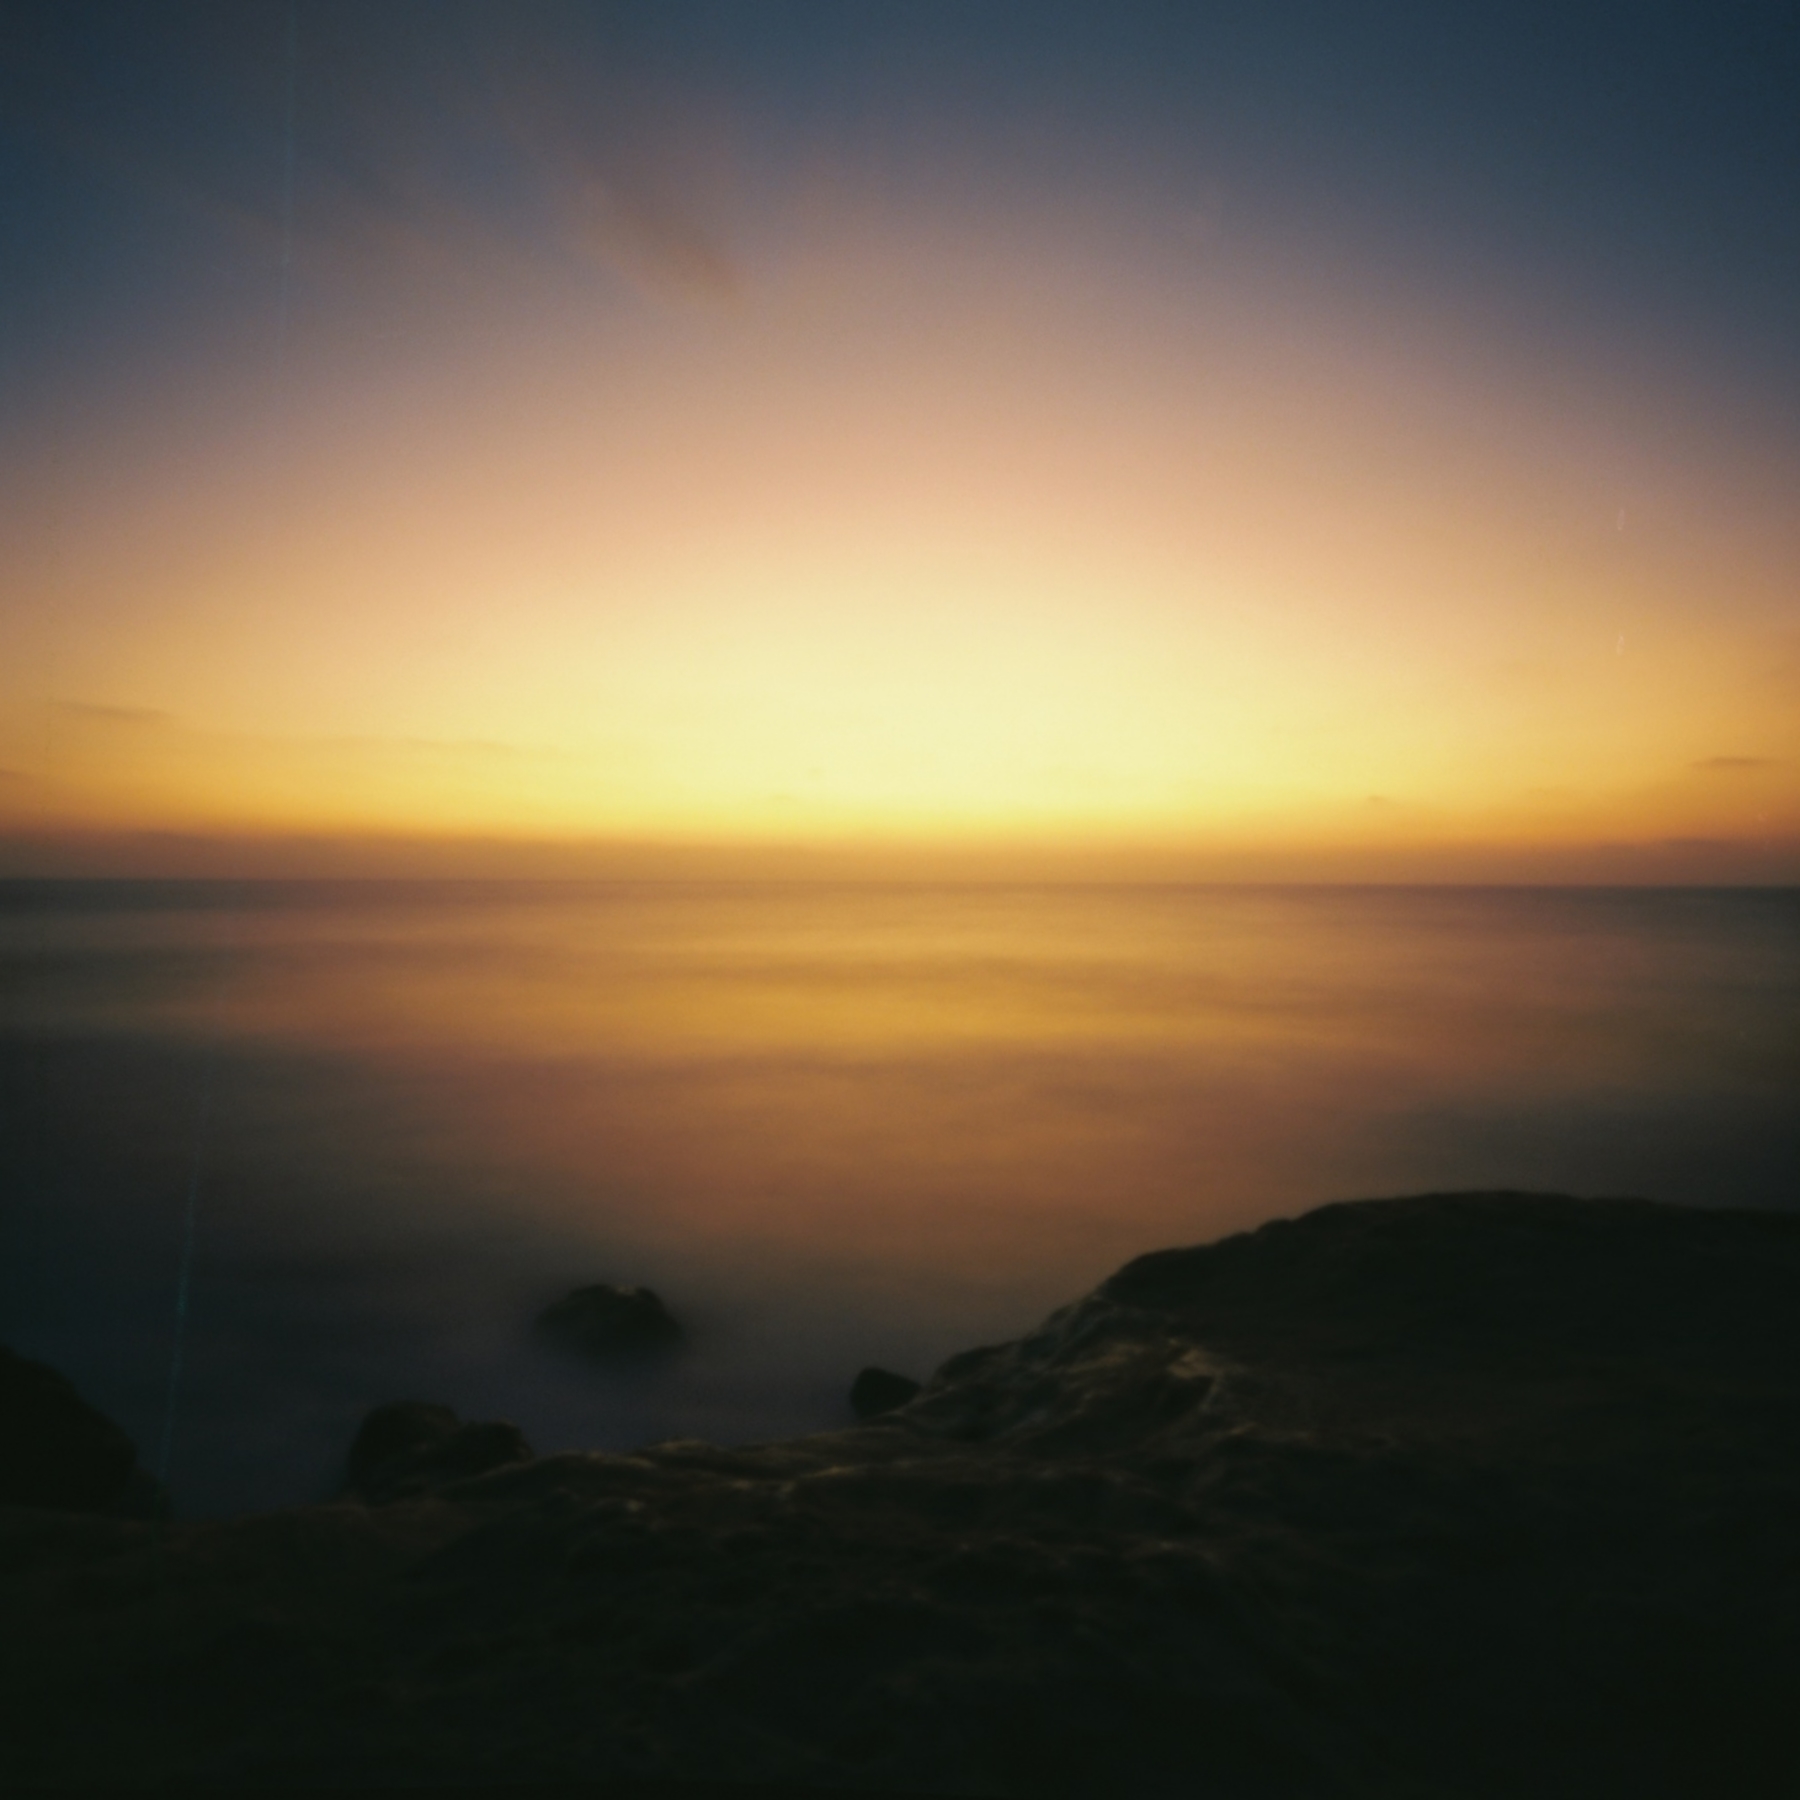 Golden Sunset | Flyer 6x6 pinhole camera | Daphne Schnitzer